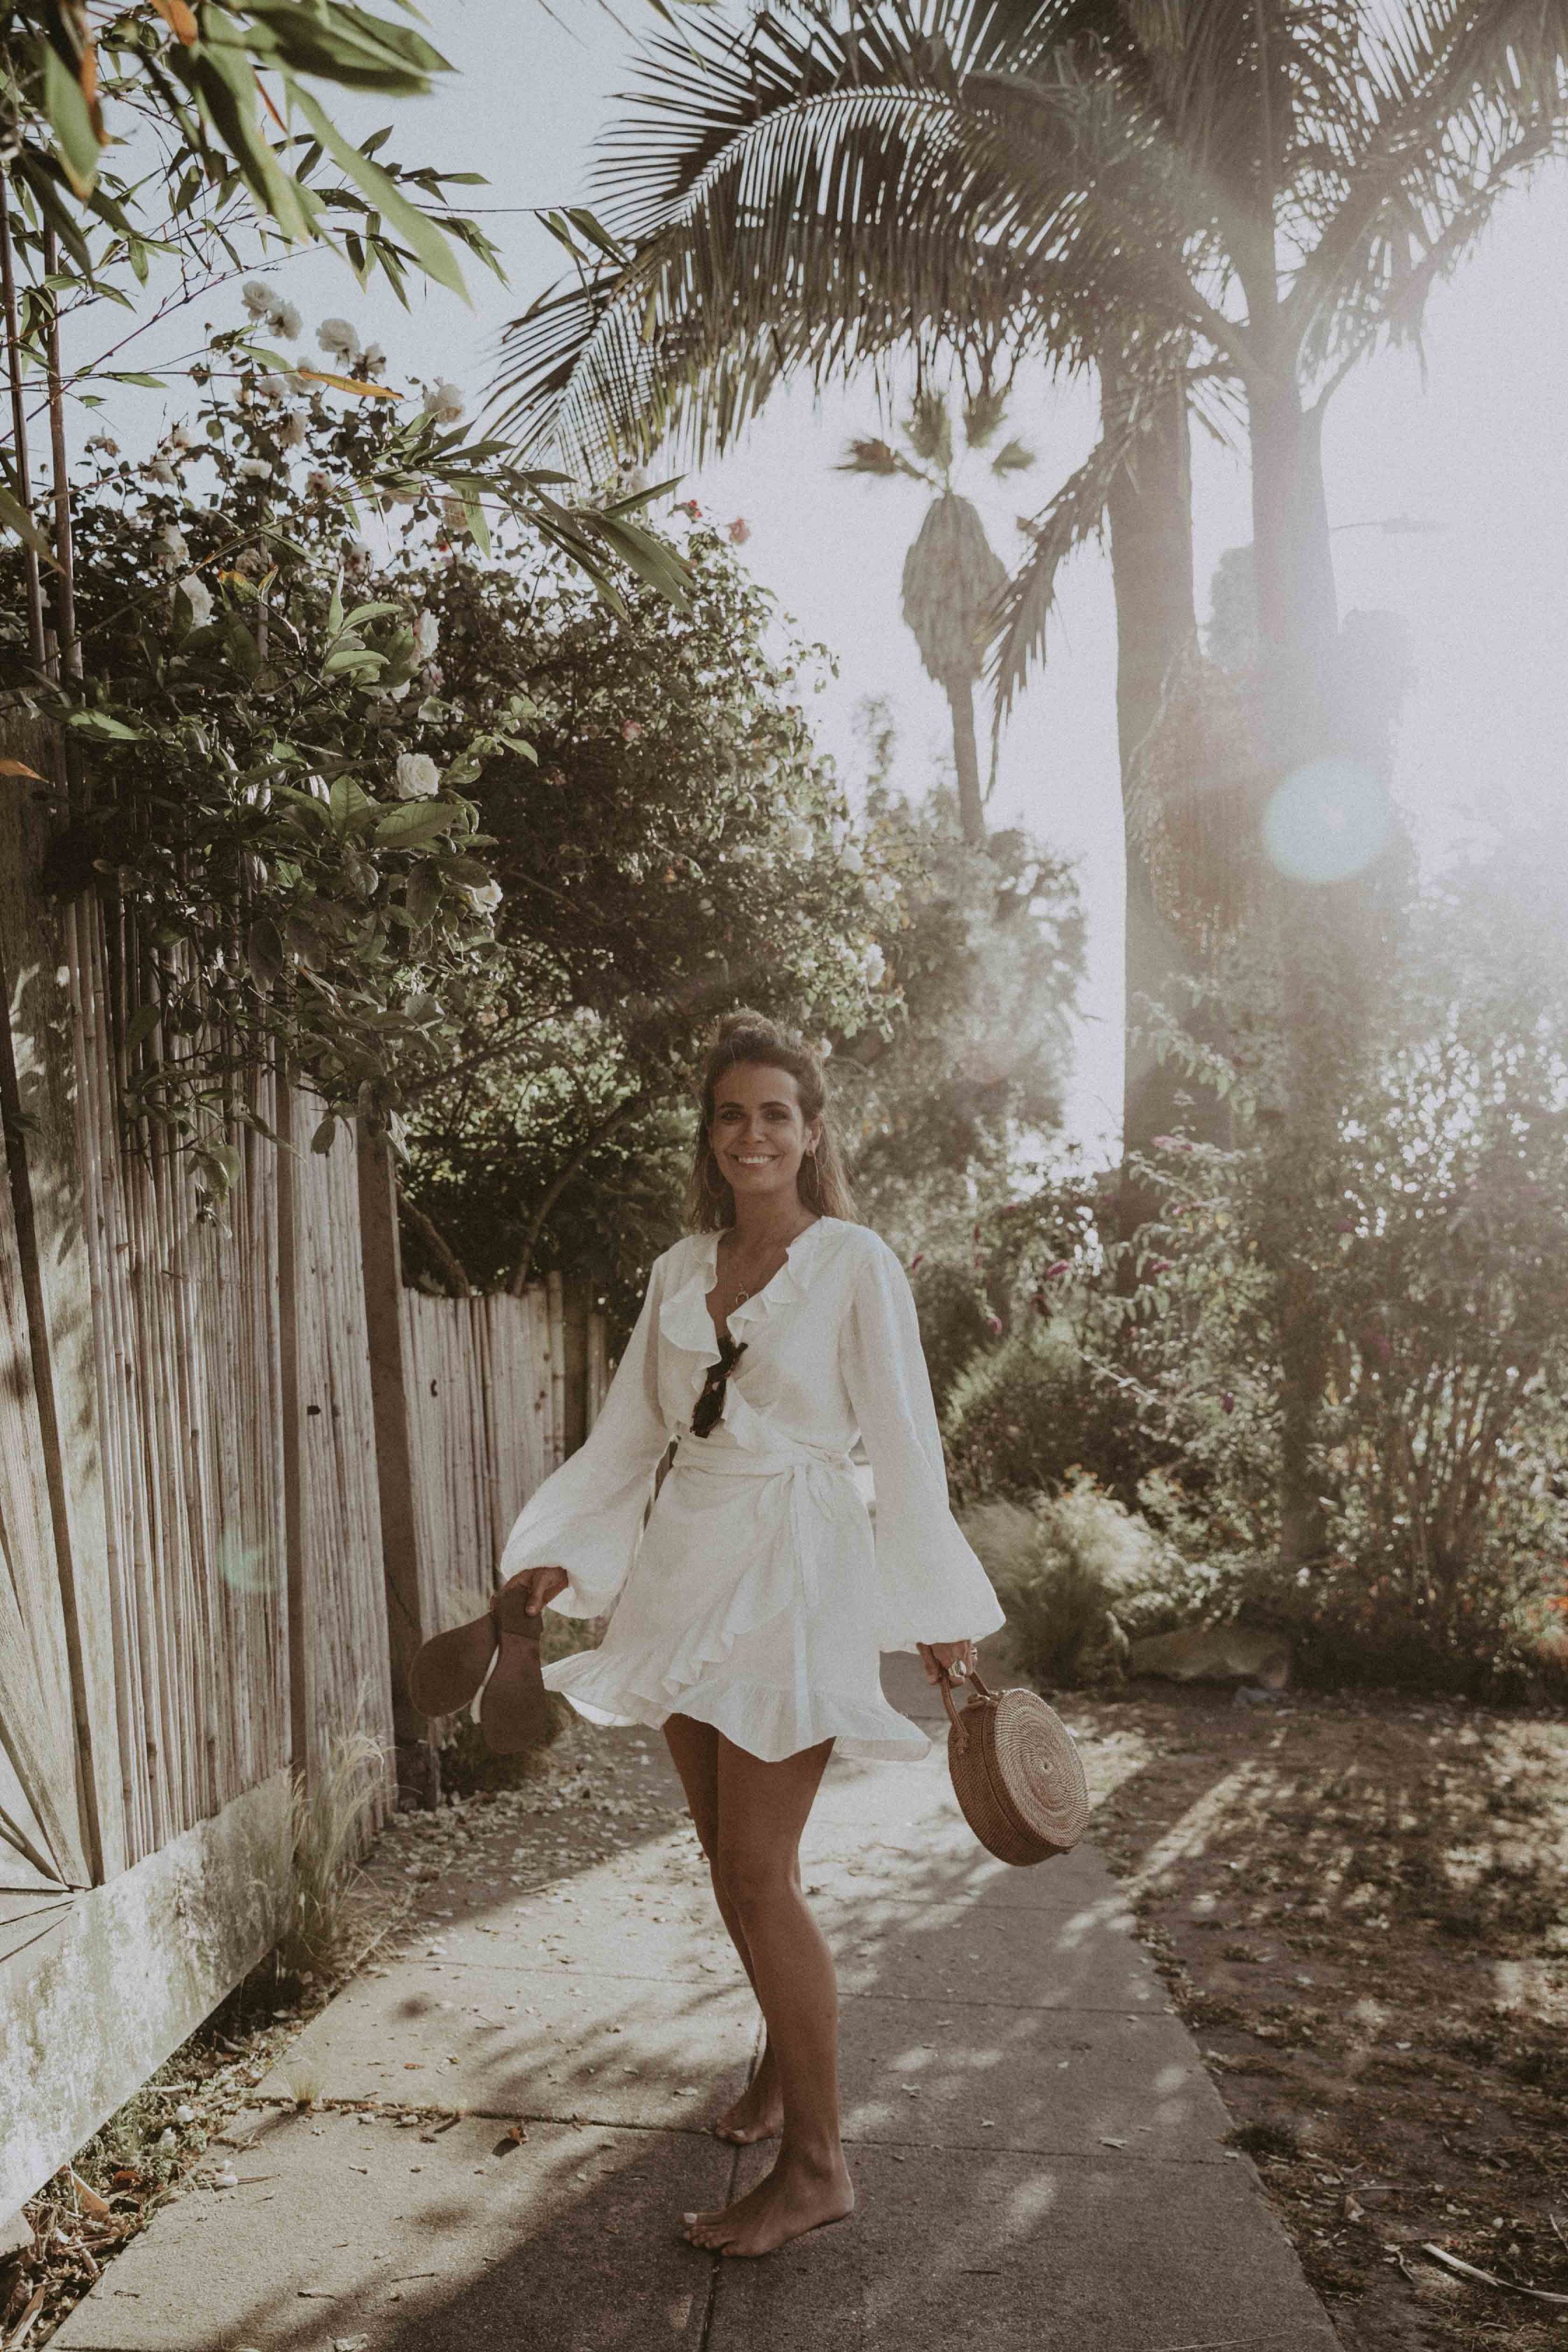 Summer dress and flat sandals around Venice Beach, California